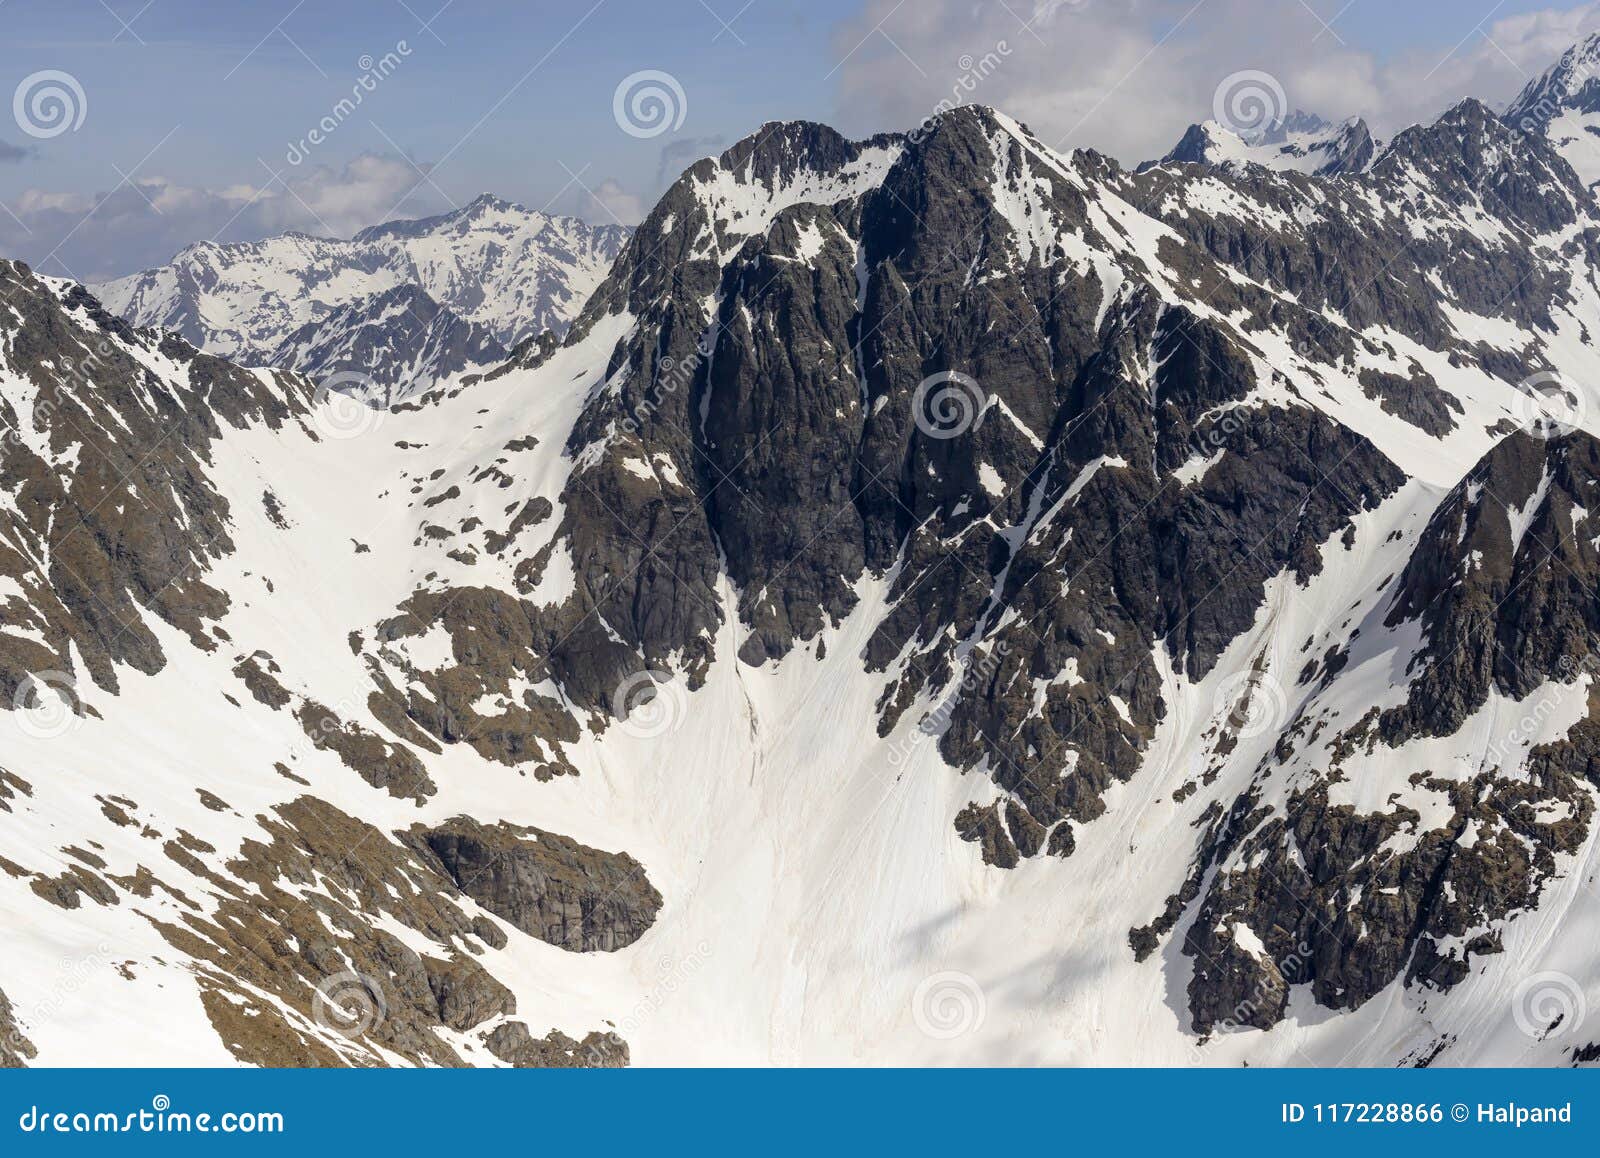 steep cliffs of tenda diavolo peak, orobie, italy